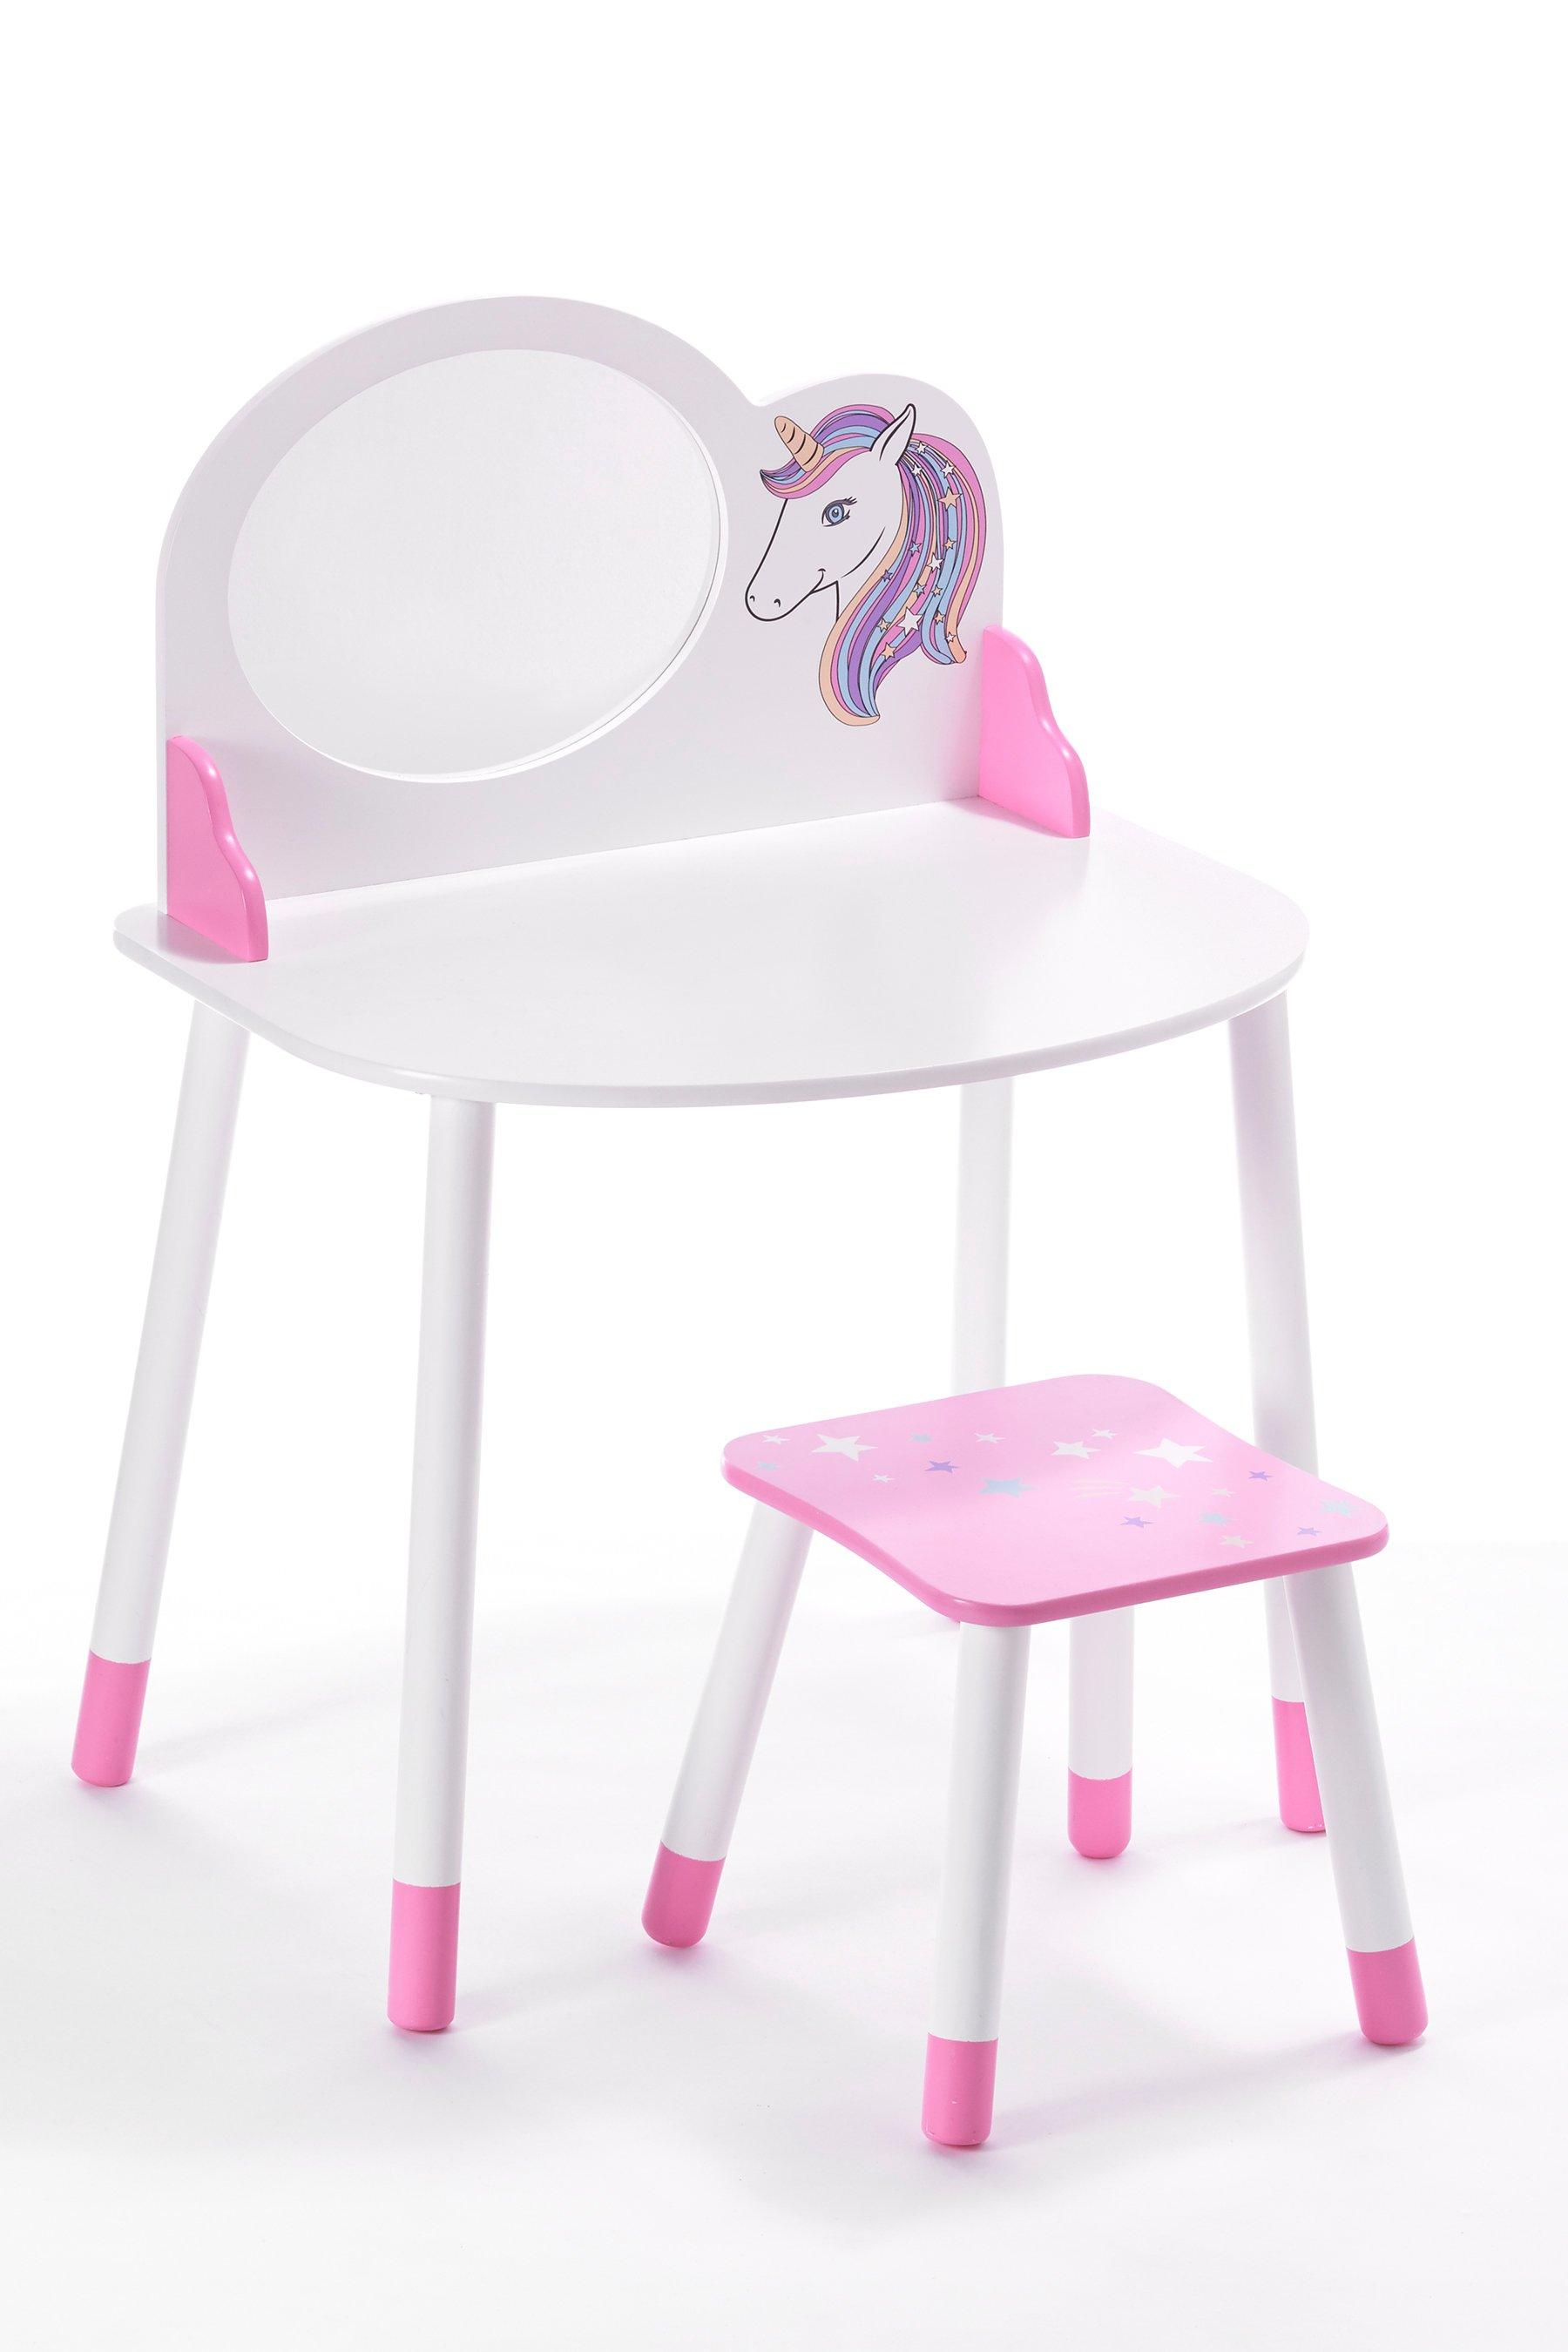 unicorn vanity table and stool